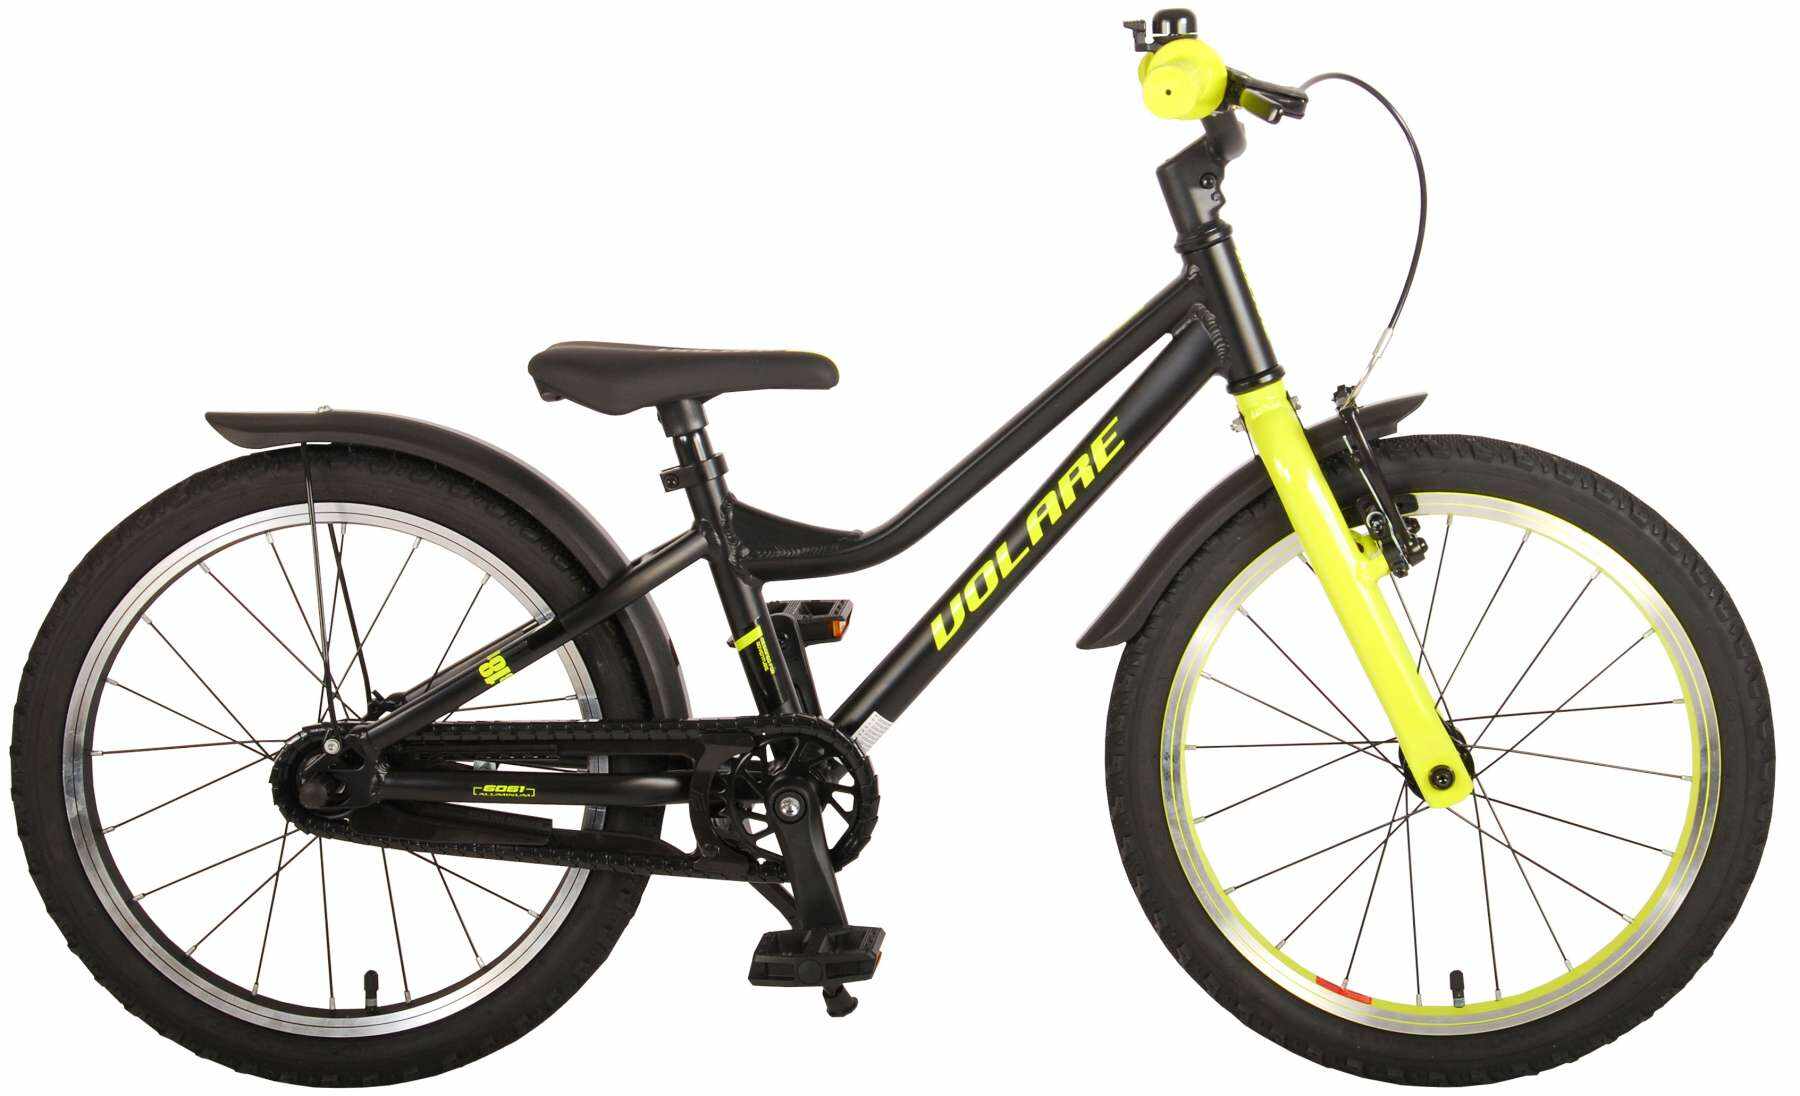 Bicicleta Volare Blaster pentru copii - Baieti - 18 inch - Negru Verde - Colectia Prime culoare Negru/Verde